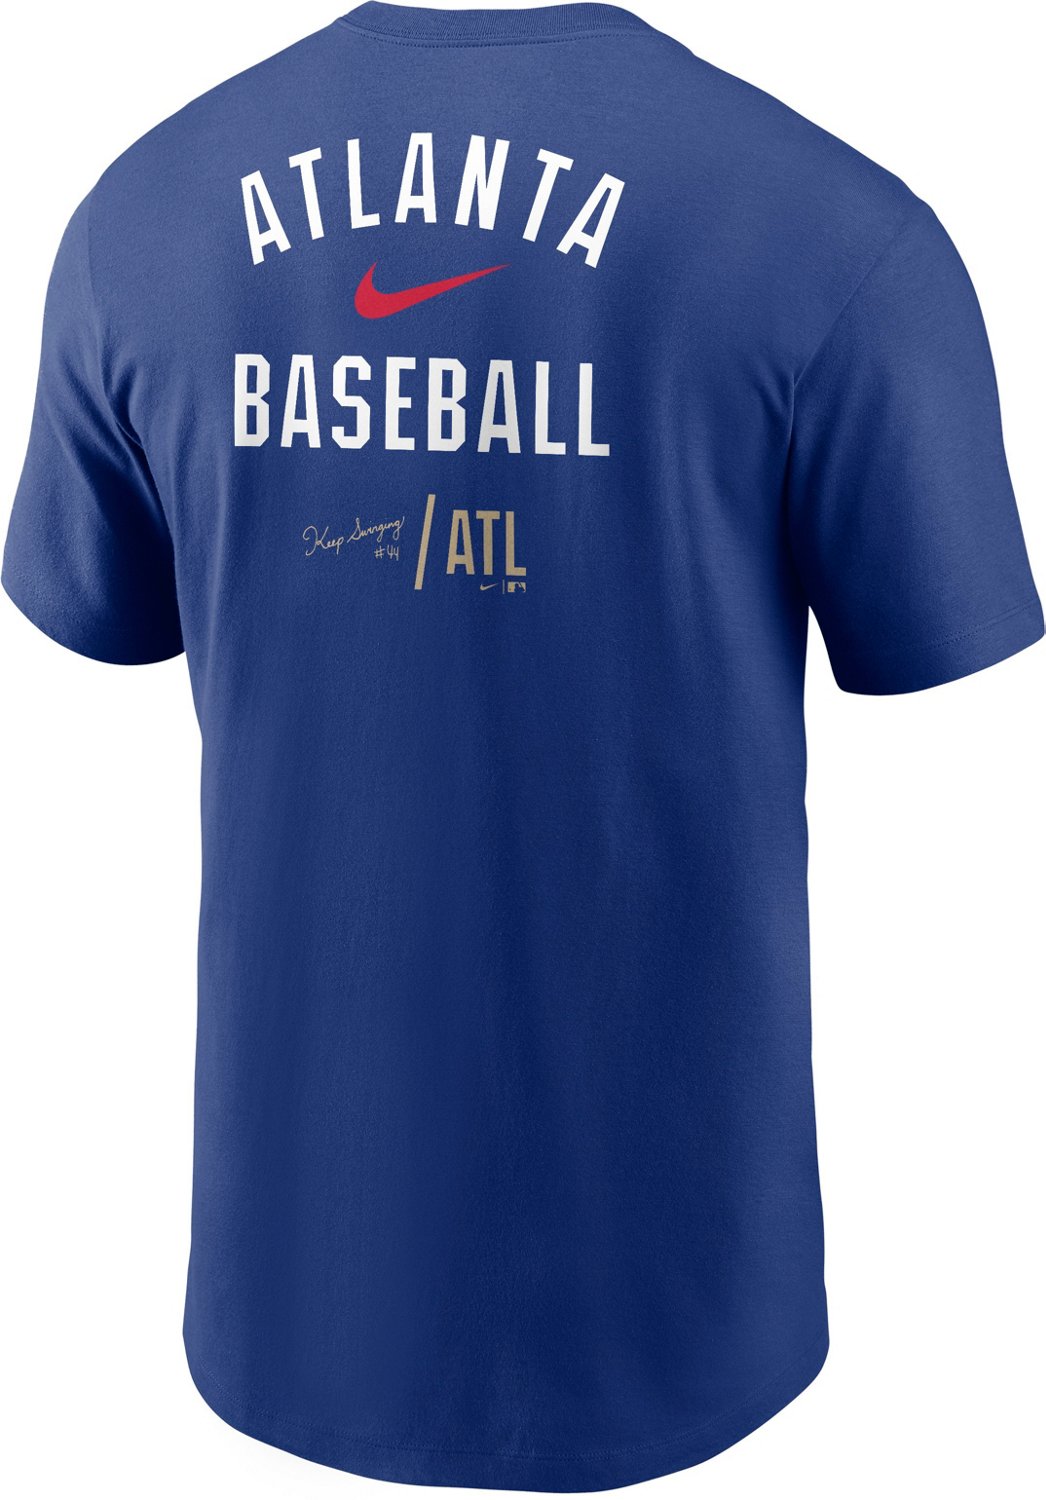  Atlanta Georgia ATL Long Sleeve T-Shirt : Sports & Outdoors